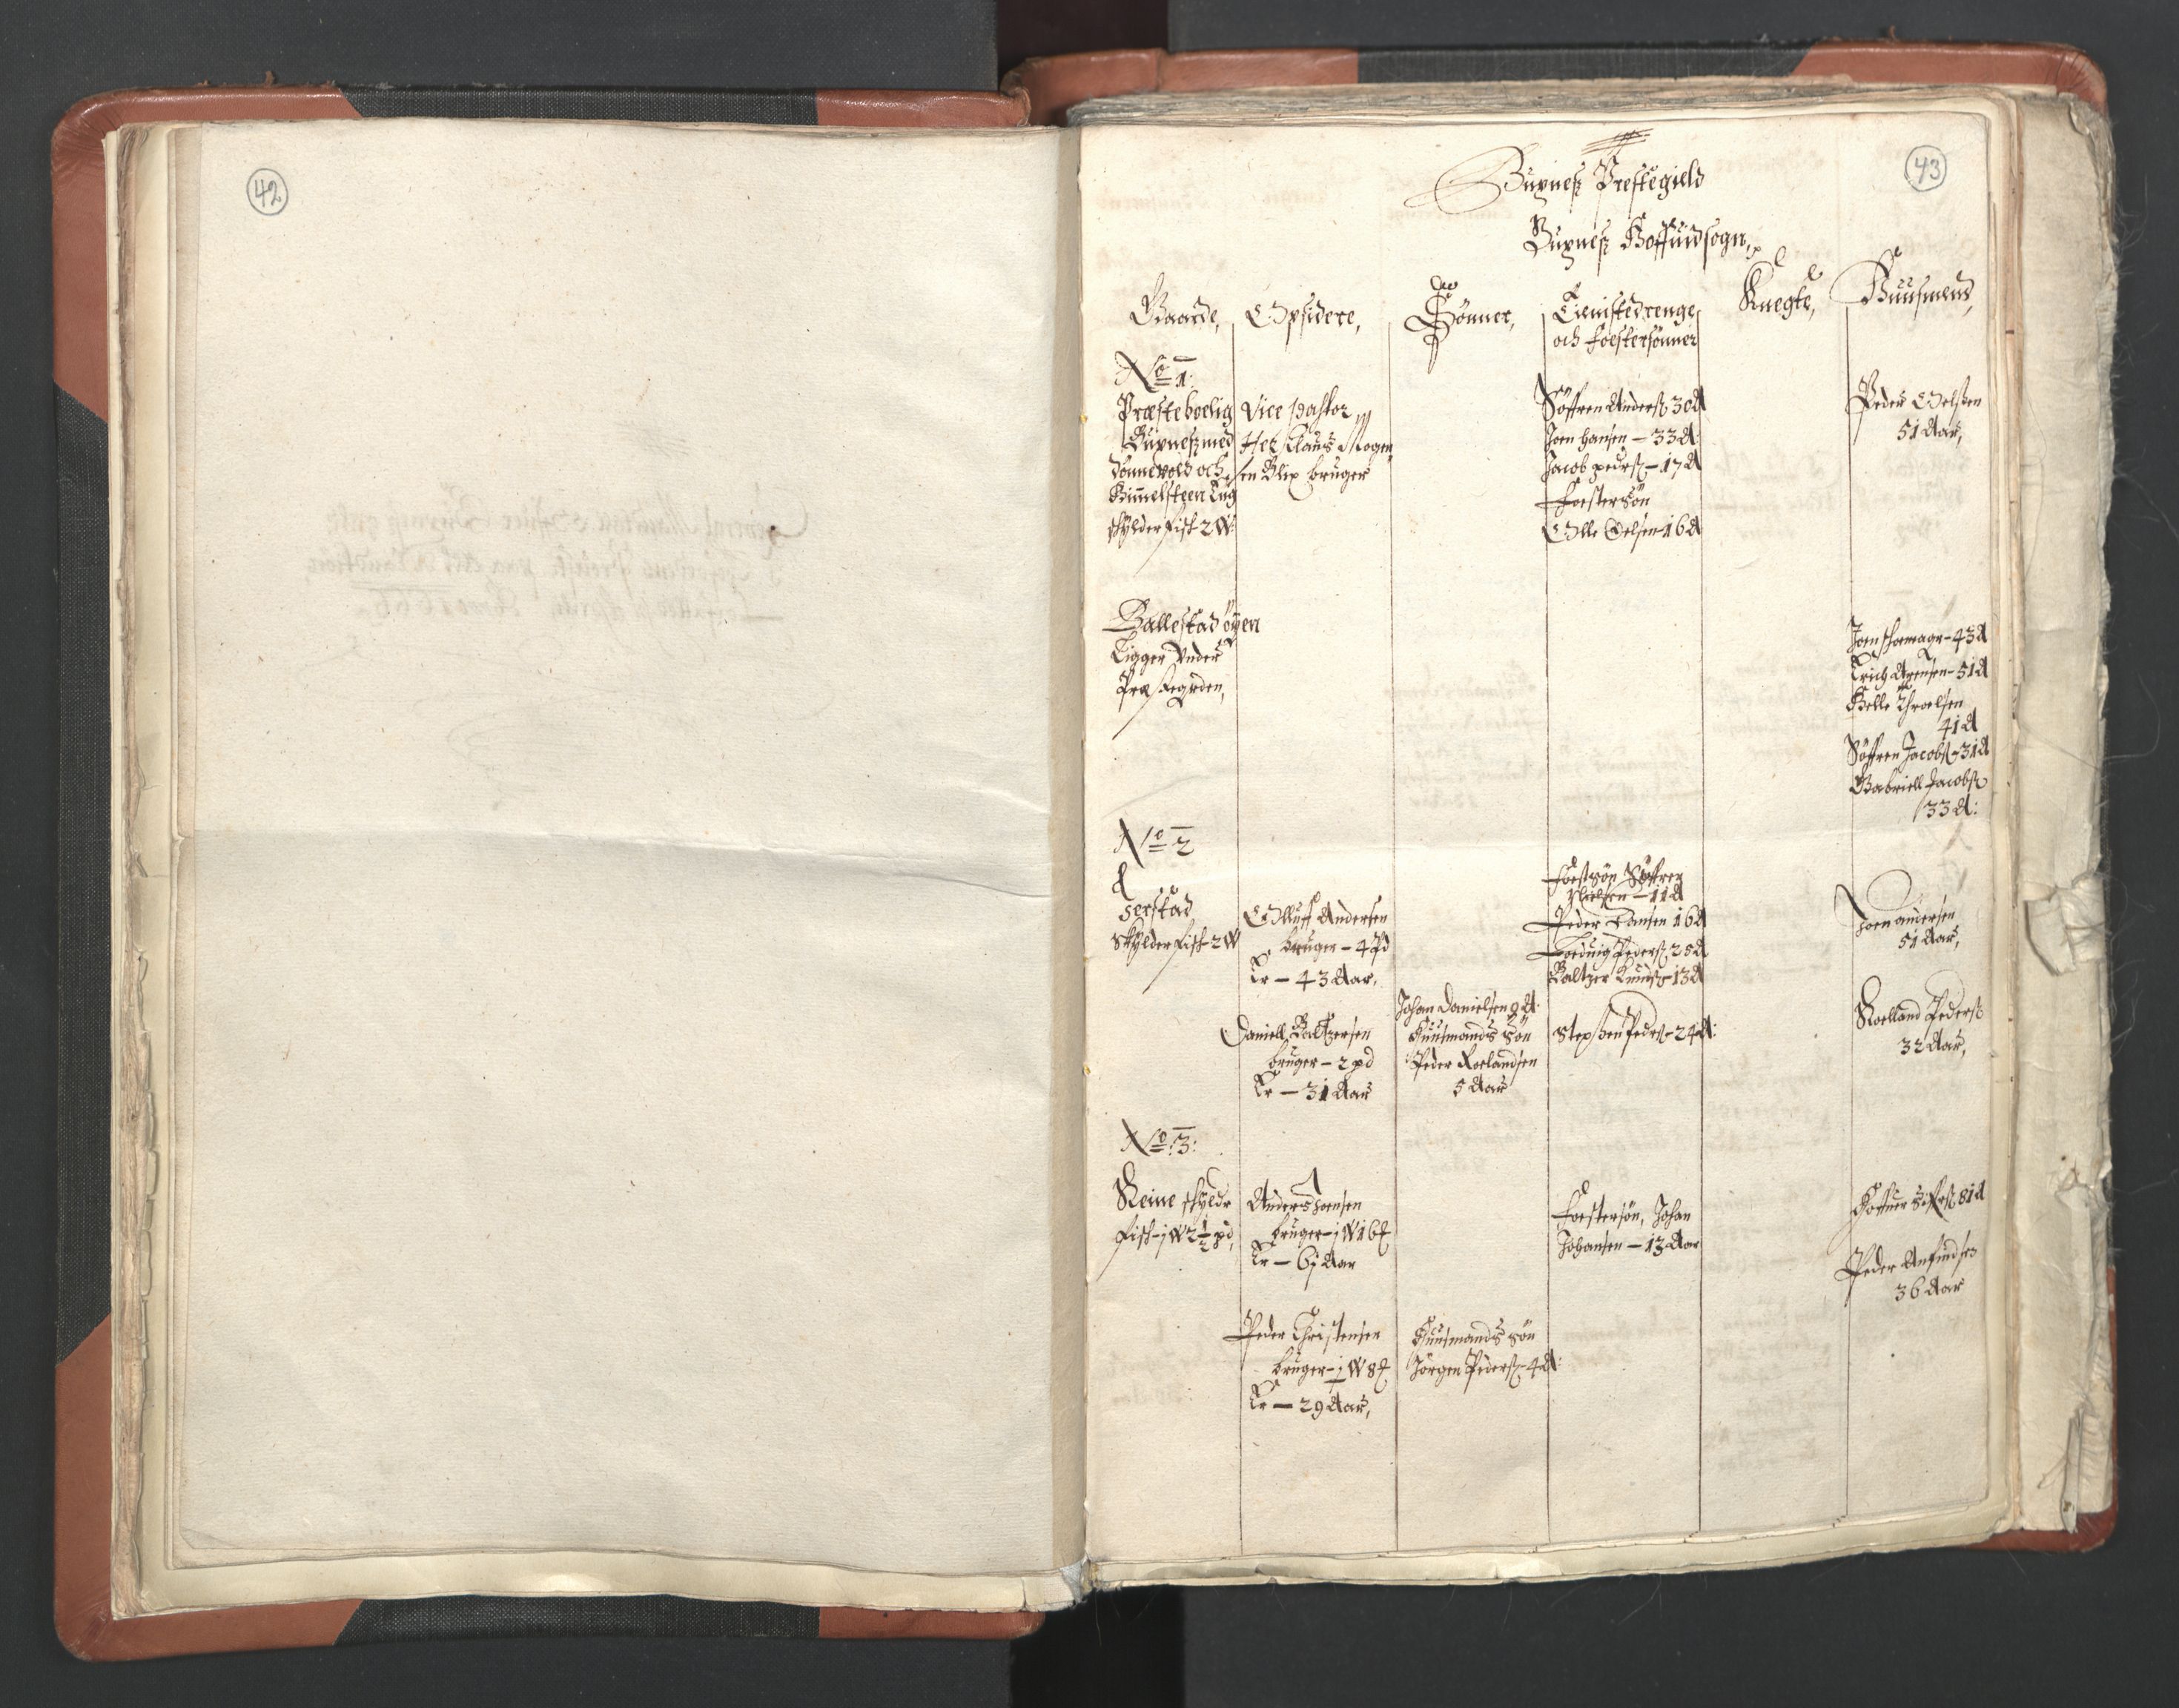 RA, Vicar's Census 1664-1666, no. 36: Lofoten and Vesterålen deanery, Senja deanery and Troms deanery, 1664-1666, p. 42-43